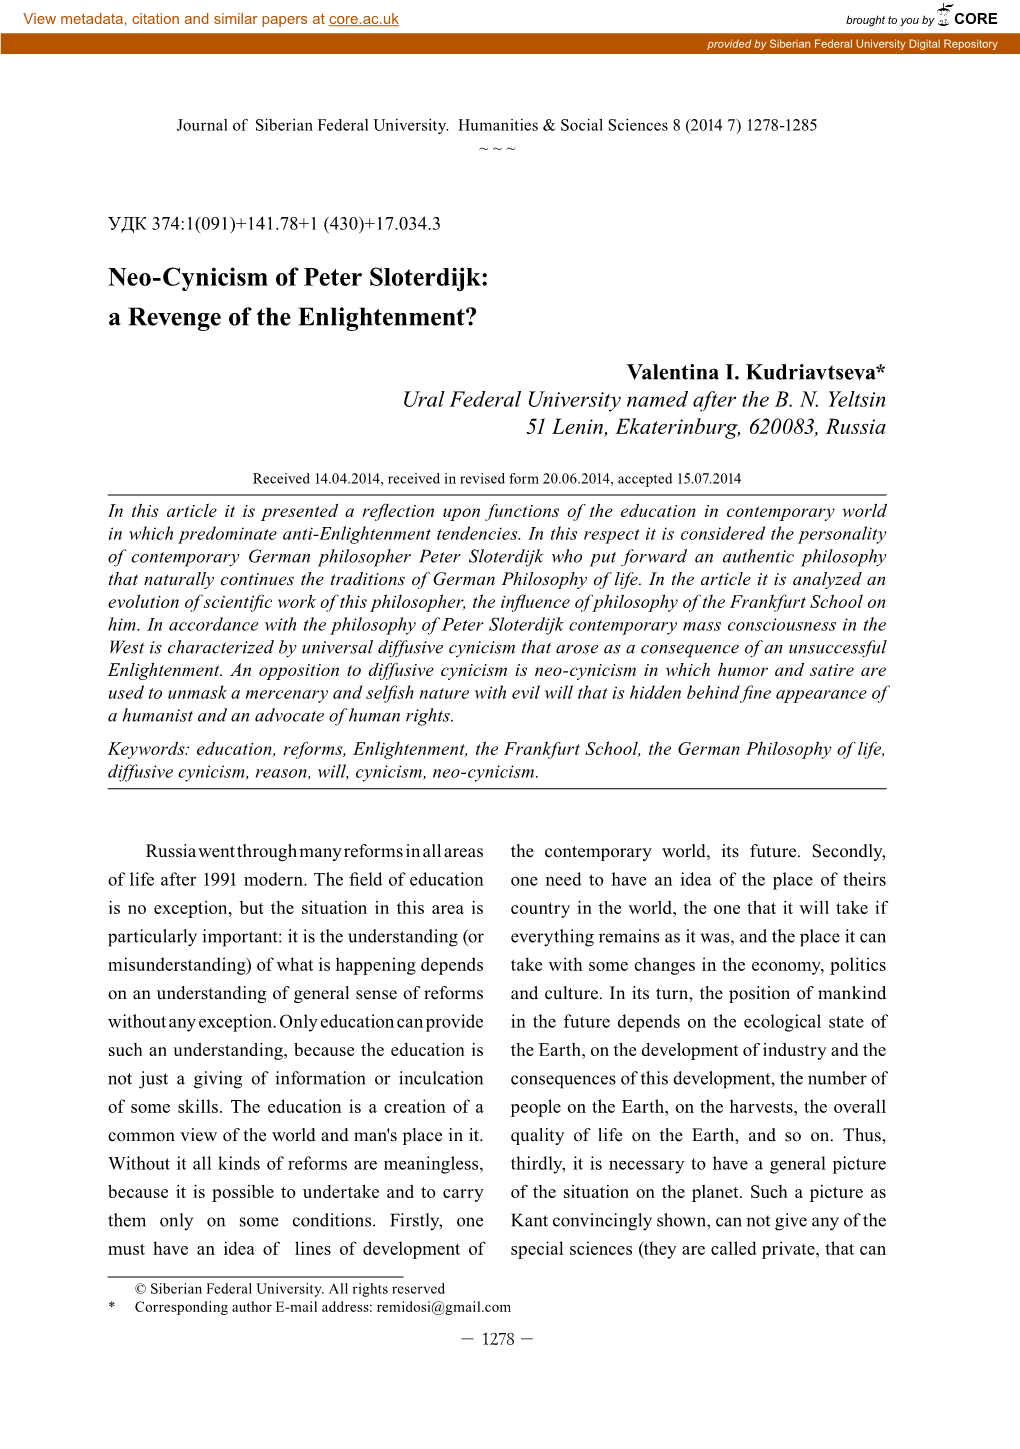 Neo-Cynicism of Peter Sloterdijk: a Revenge of the Enlightenment?